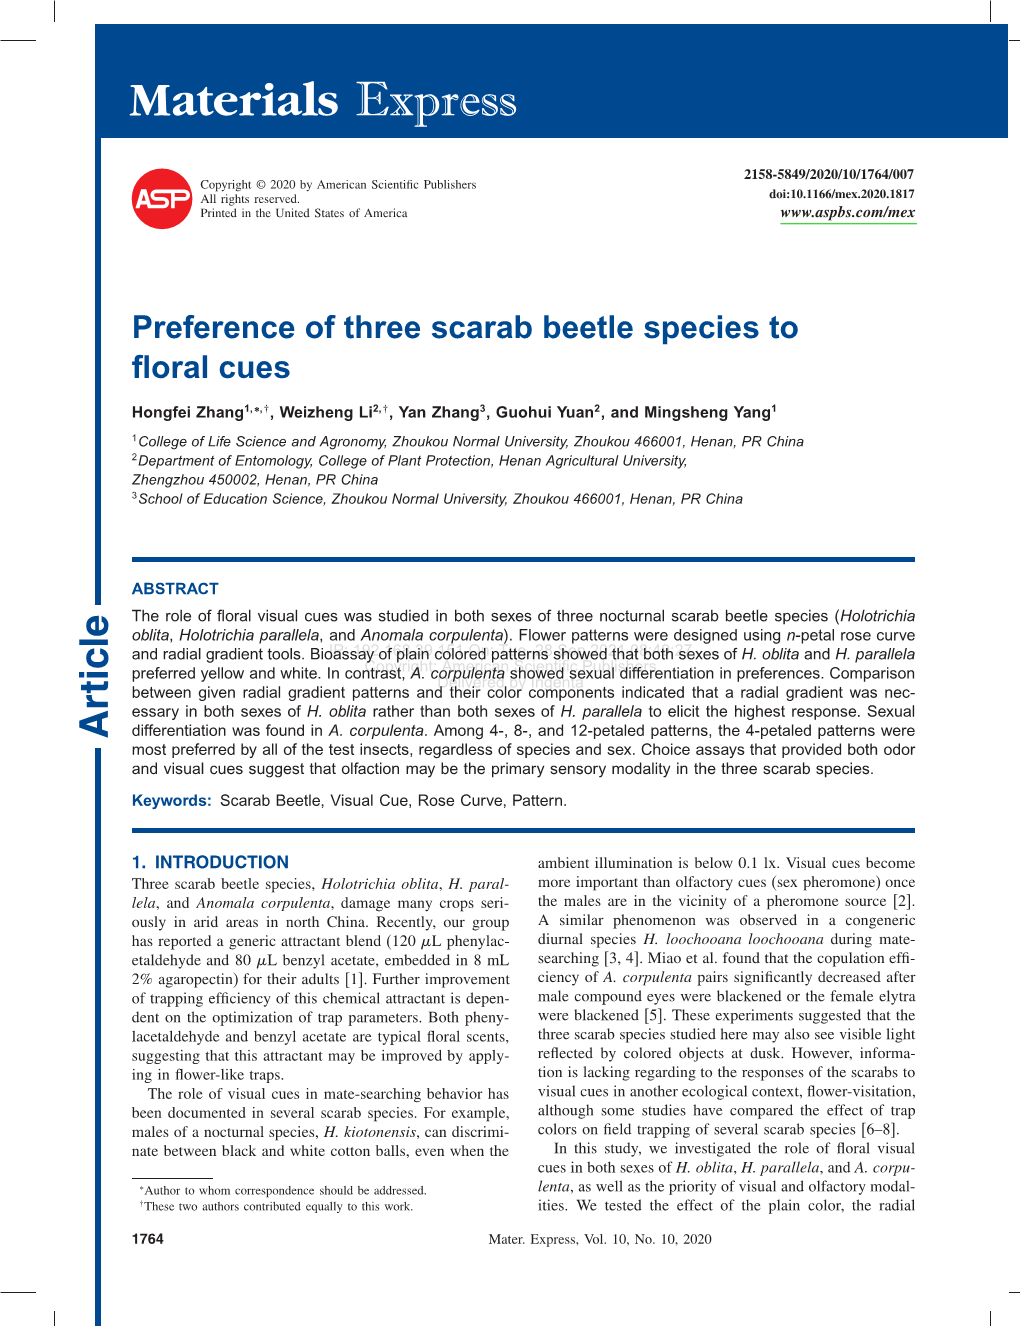 Preference of Three Scarab Beetle Species to Floral Cues